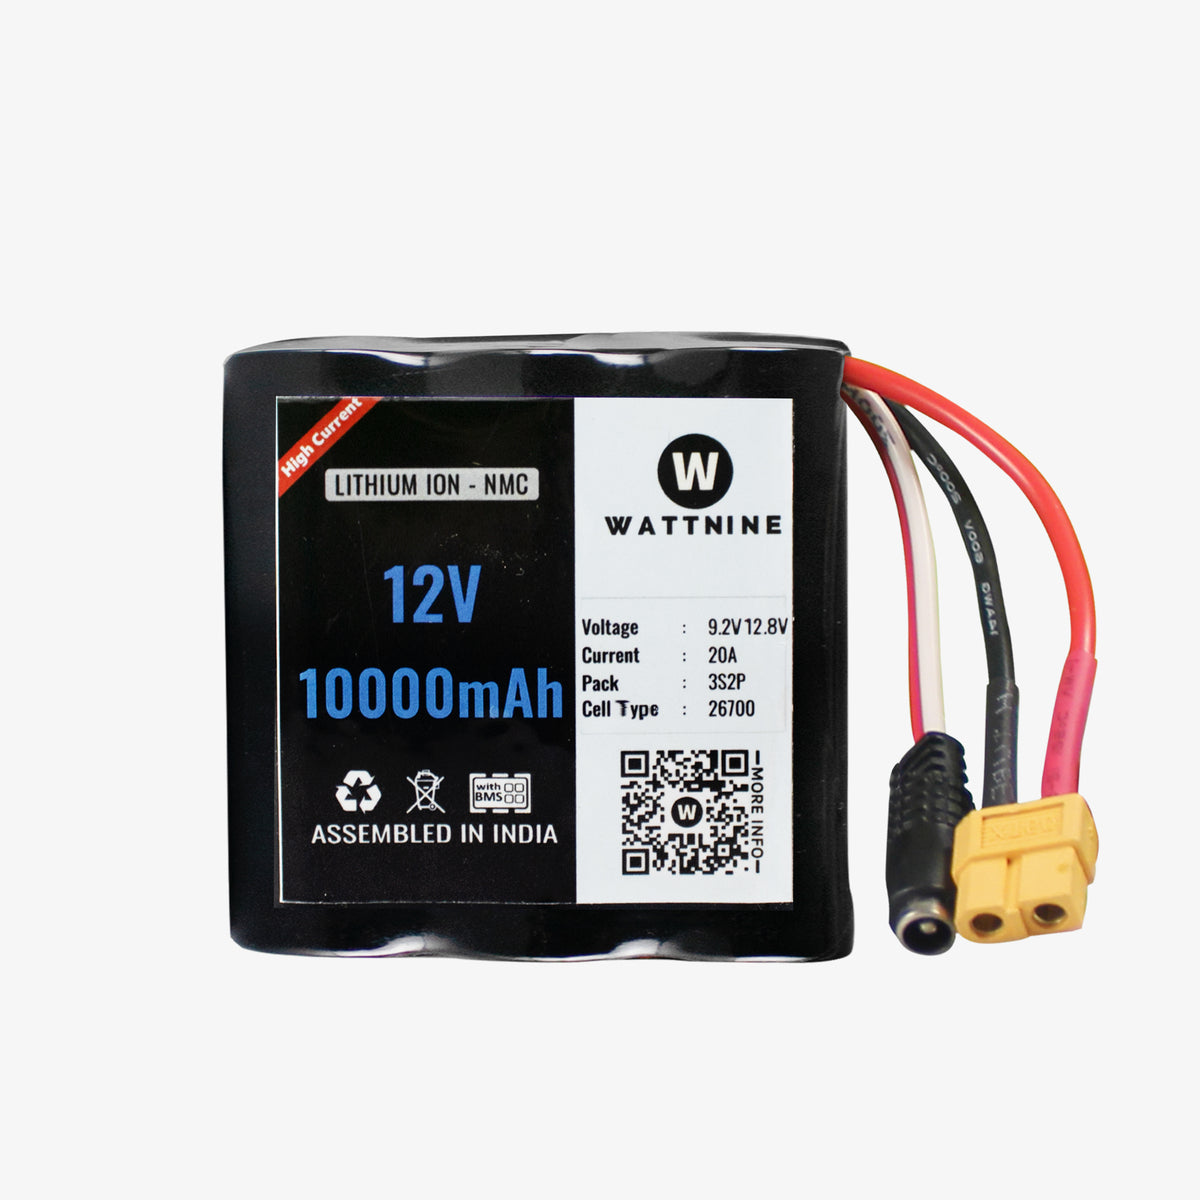 WATTNINE® 12V 10Ah Rechargeable Lithium Ion (NMC) Battery